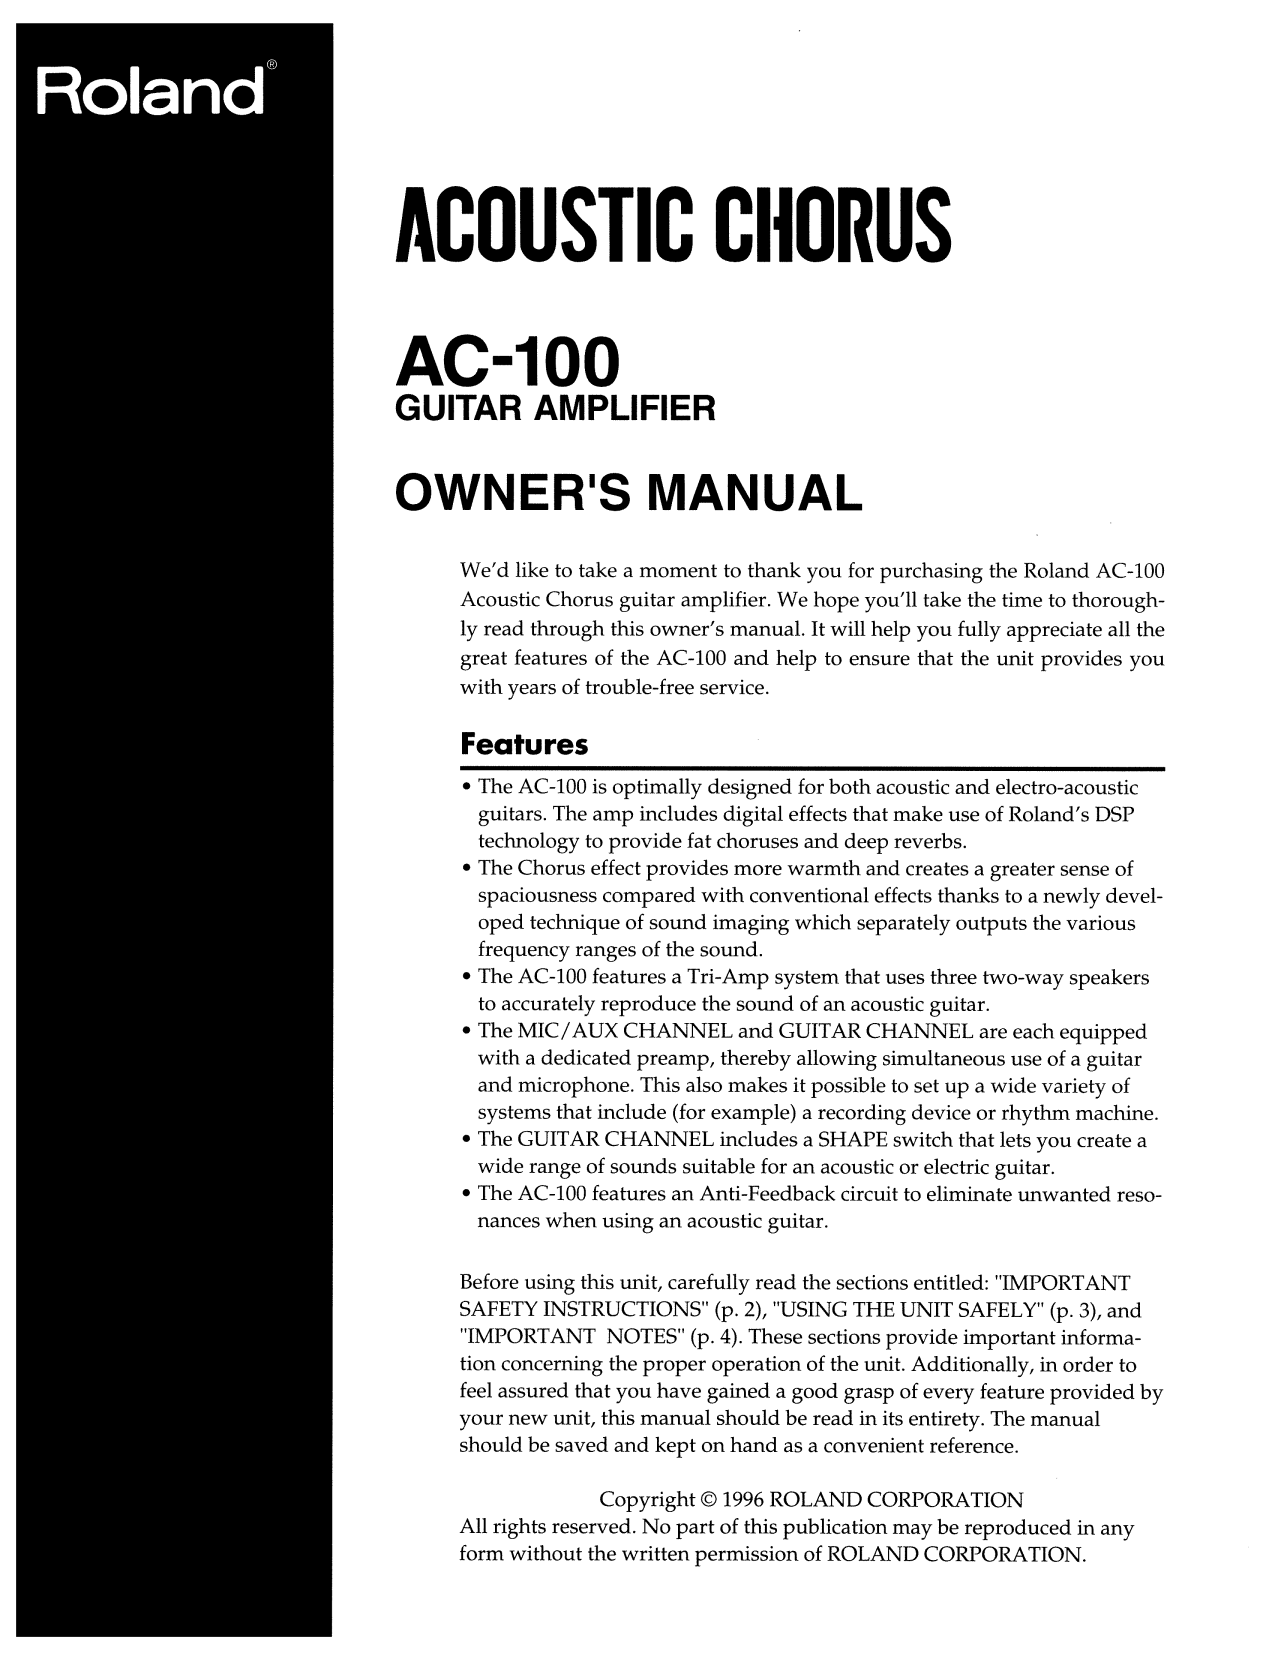 PDF manual for Roland Amp AC-100